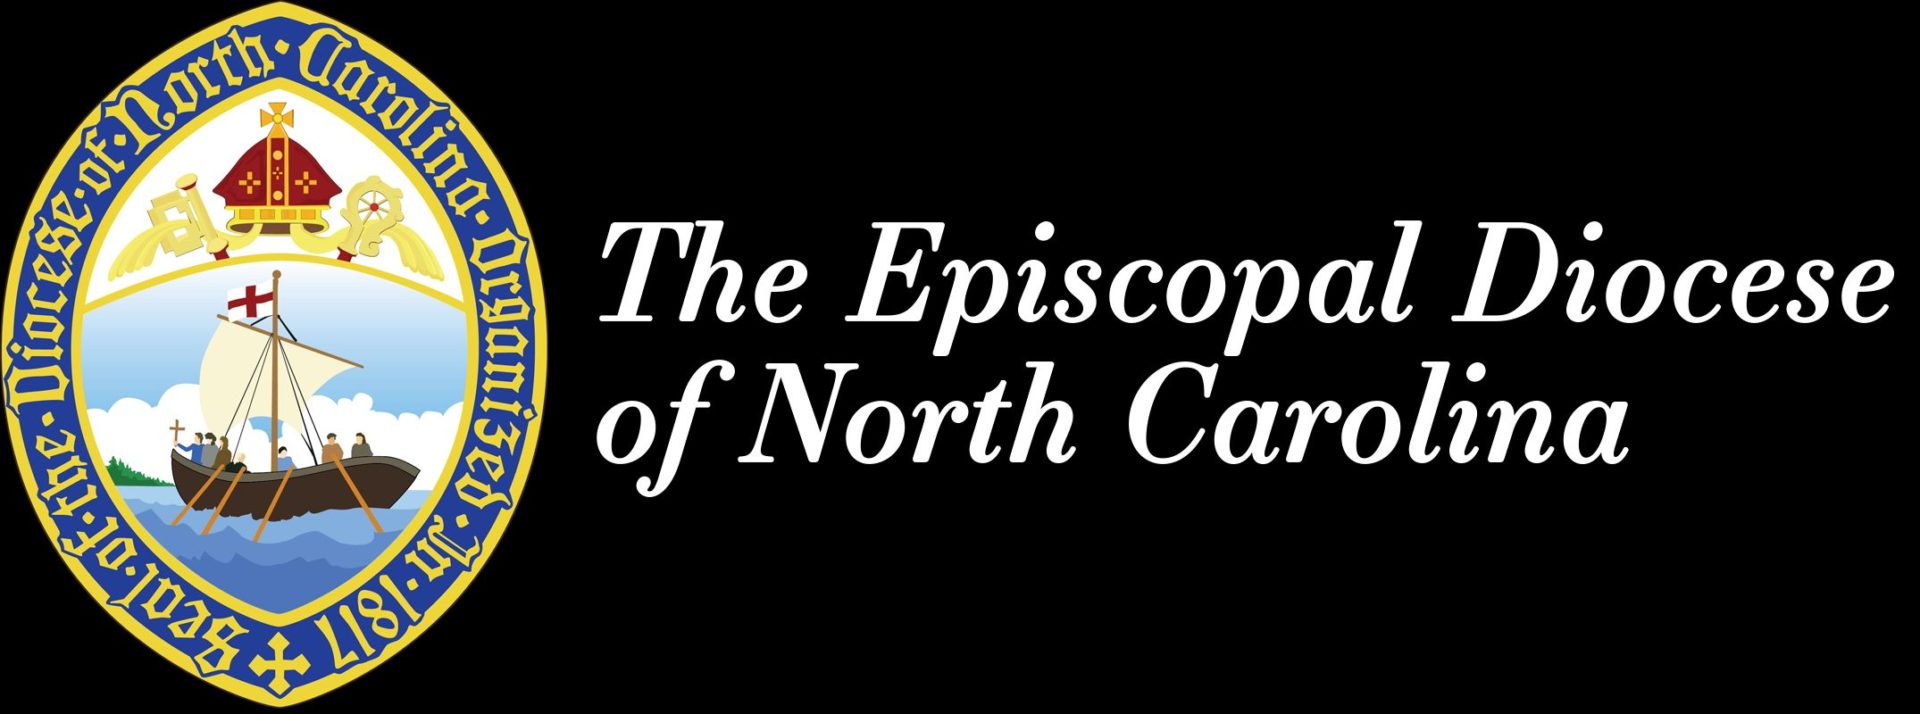 The Episcopal Diocese of North Carolina logo